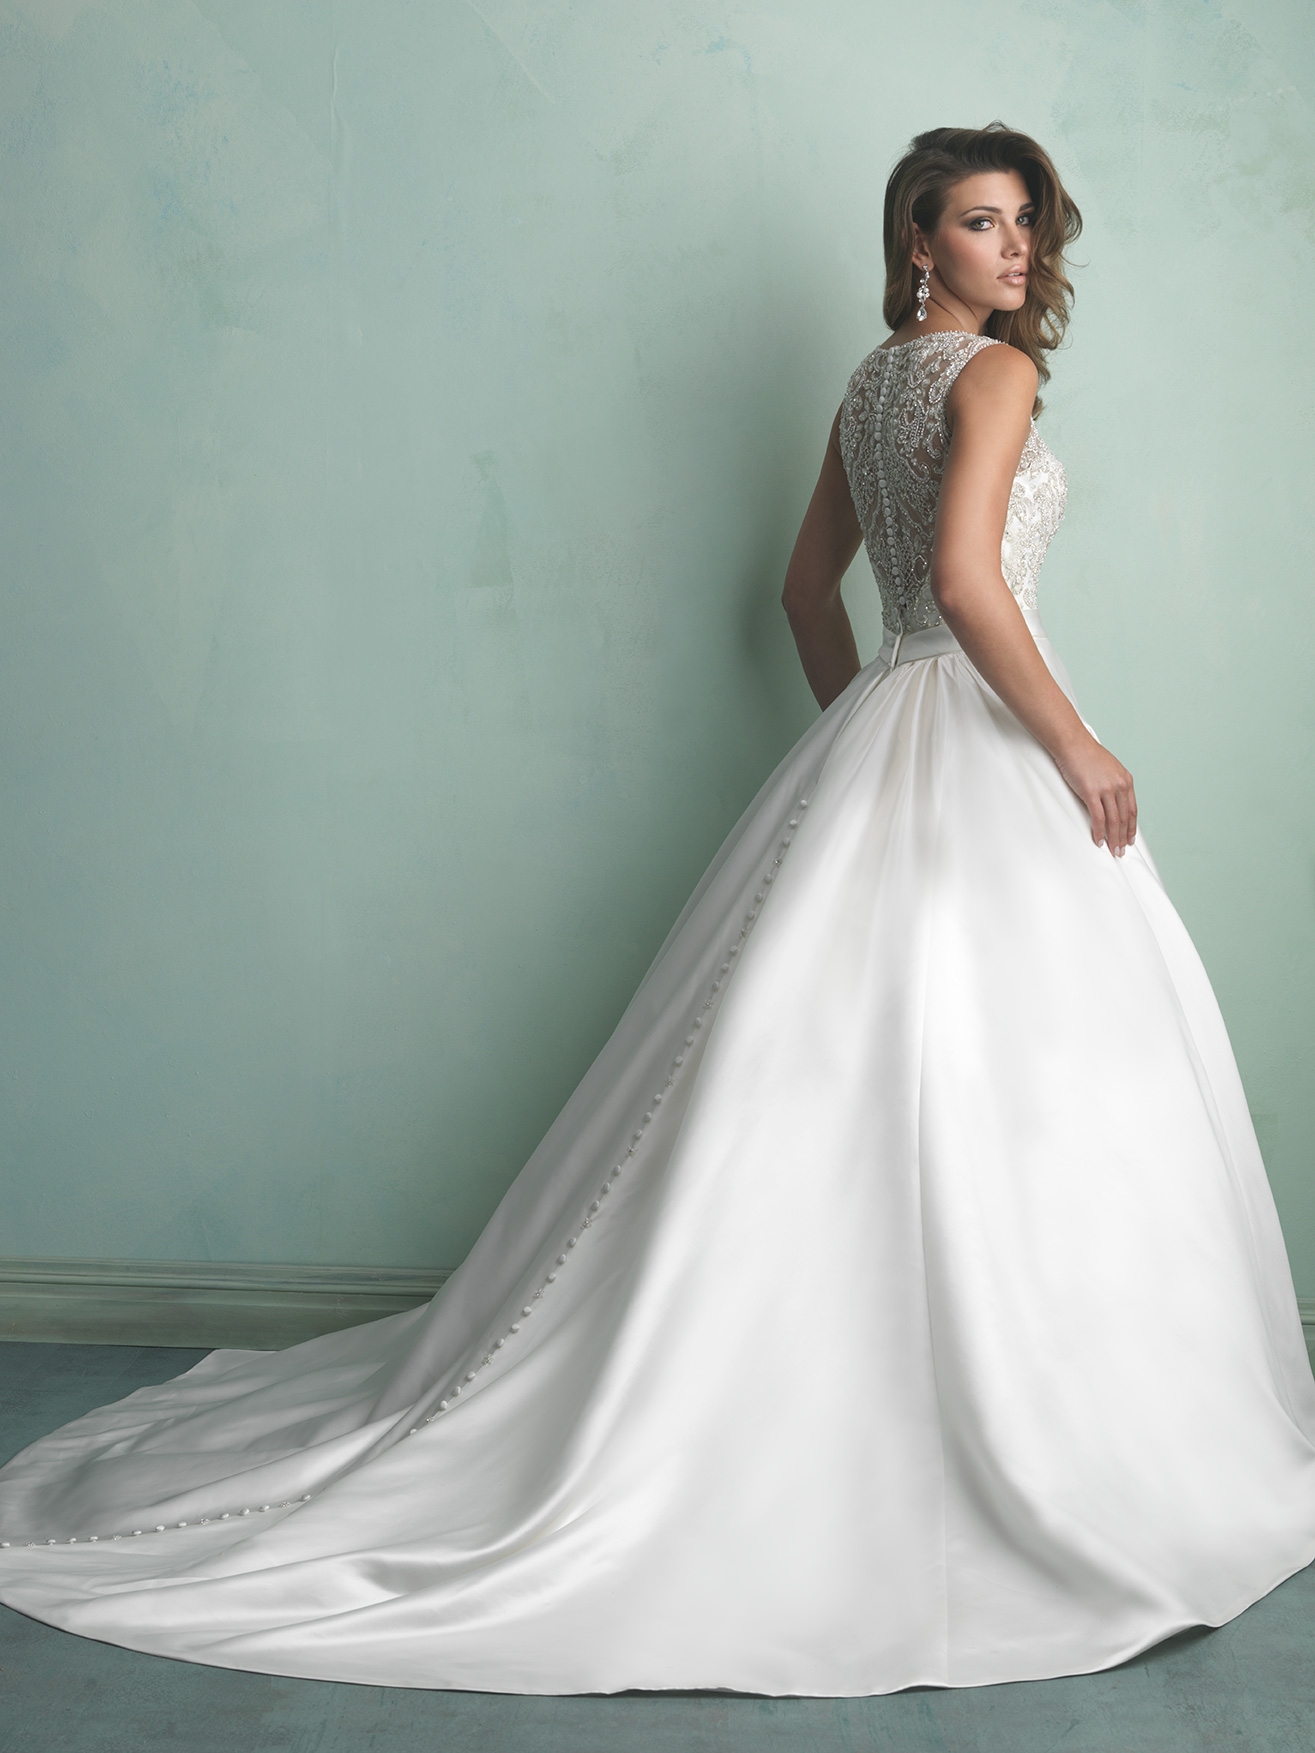 3 Stunning Plus Size Satin Ballgown Wedding Dresses